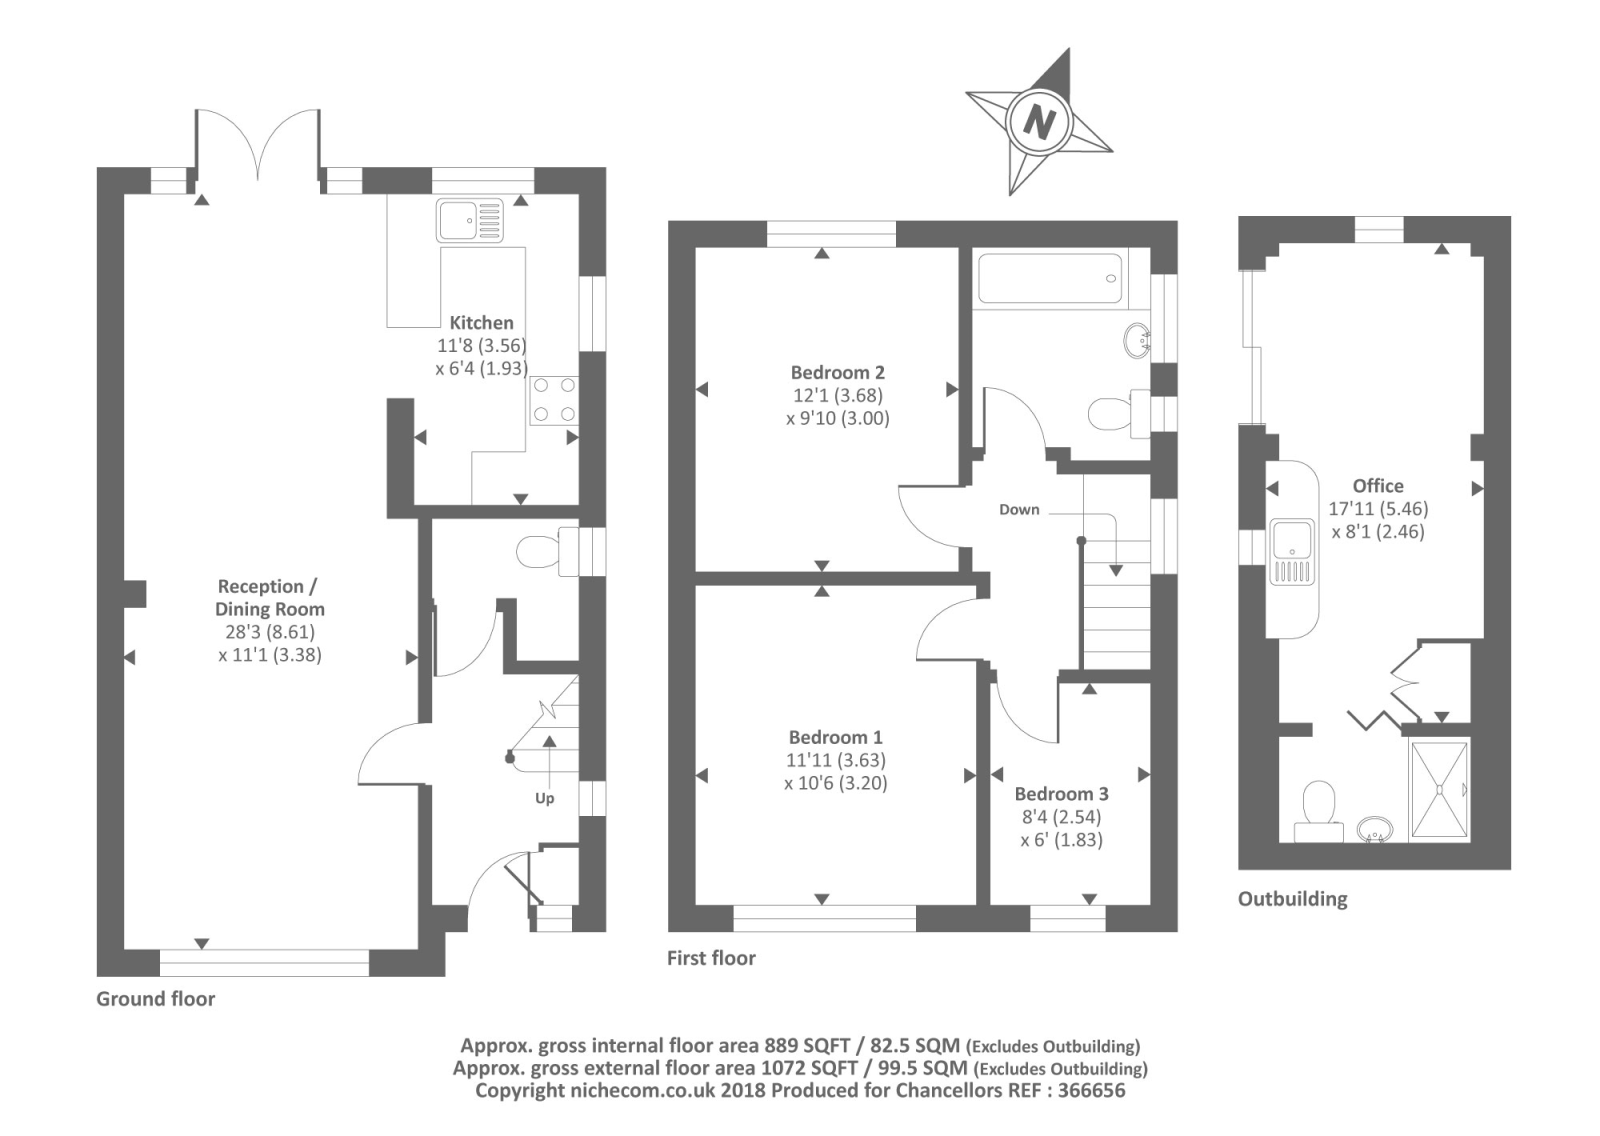 4 Bedrooms Semi-detached house for sale in Windsor, Berkshire SL4